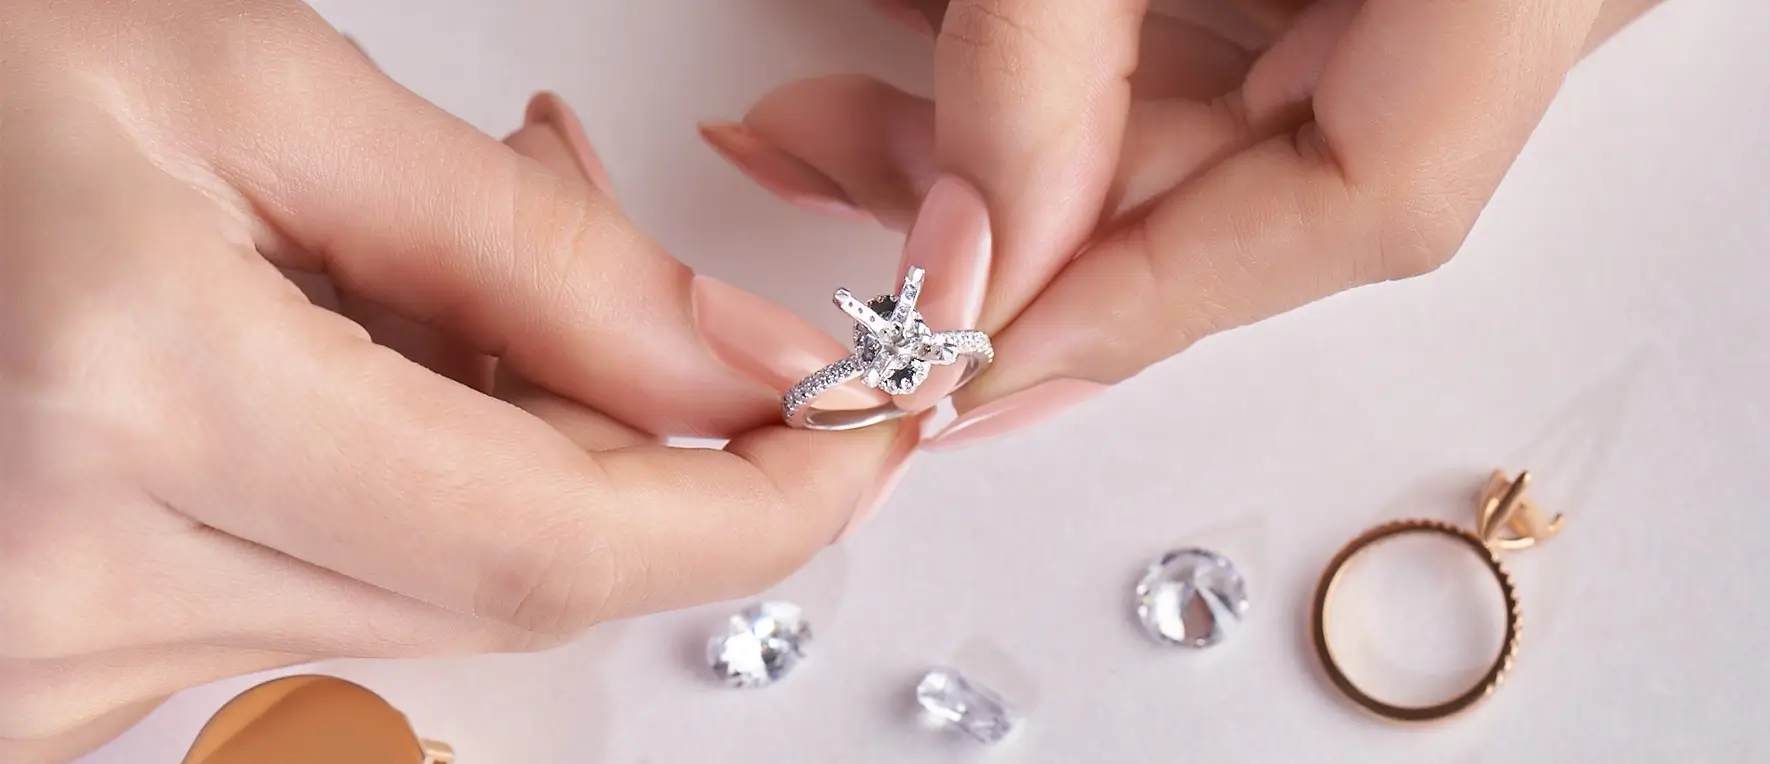 Is a 3 Carat Diamond Ring Too Big? - Nashville Bride Guide